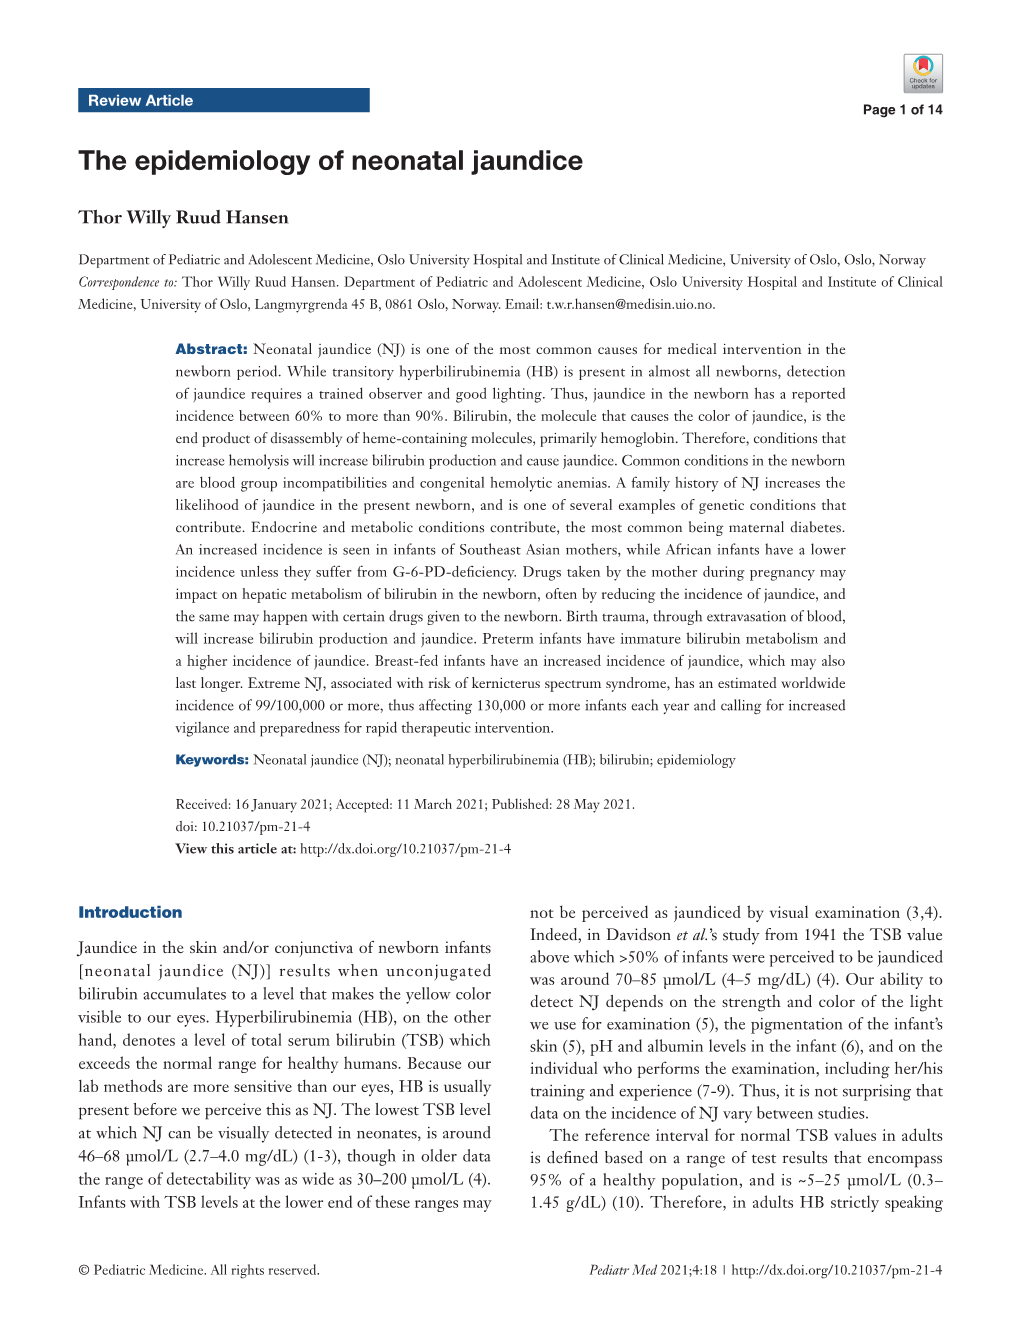 The Epidemiology of Neonatal Jaundice